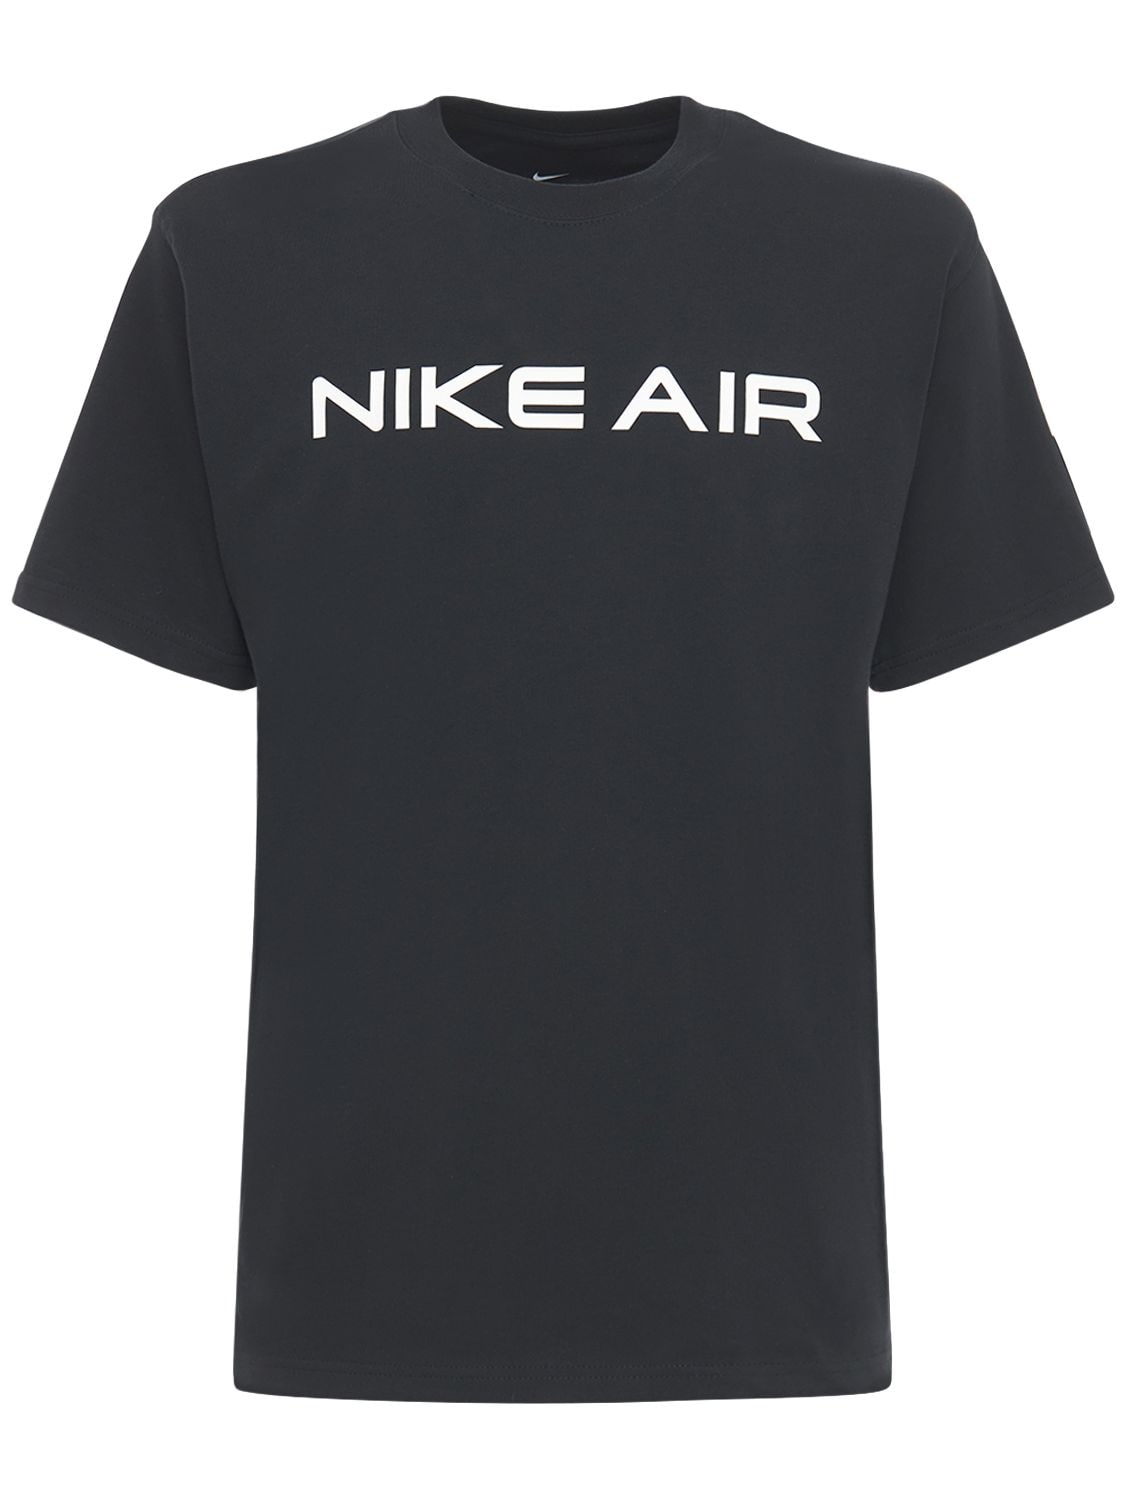 T-shirt Imprimé "nike Air" - NIKE - Modalova